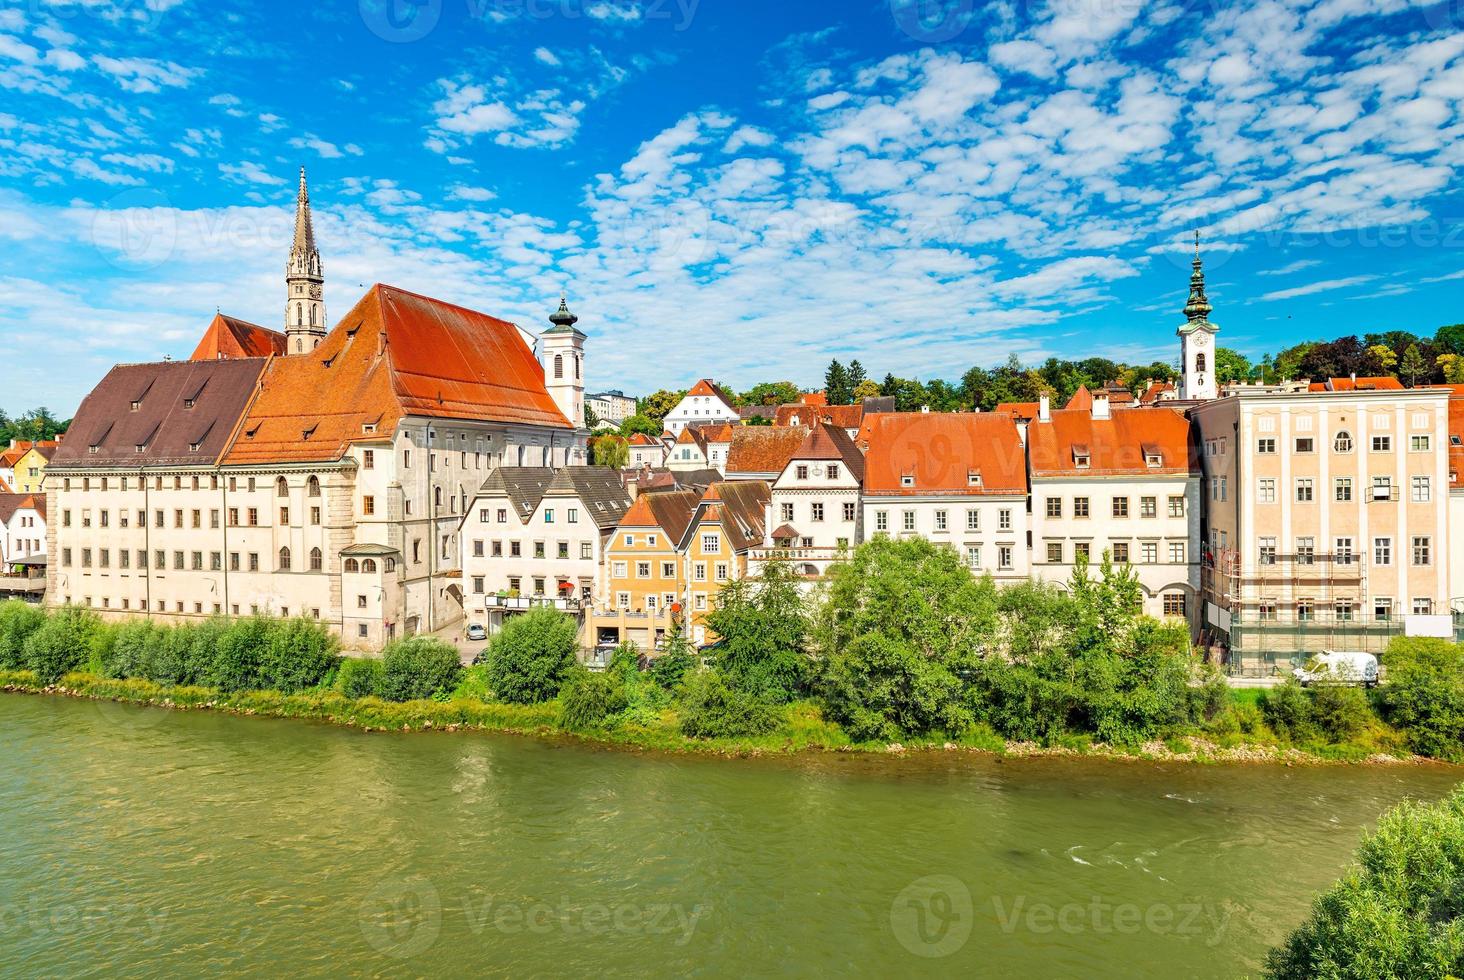 stadsbilden av den medeltida österrikiska staden Steyr, Österrike foto